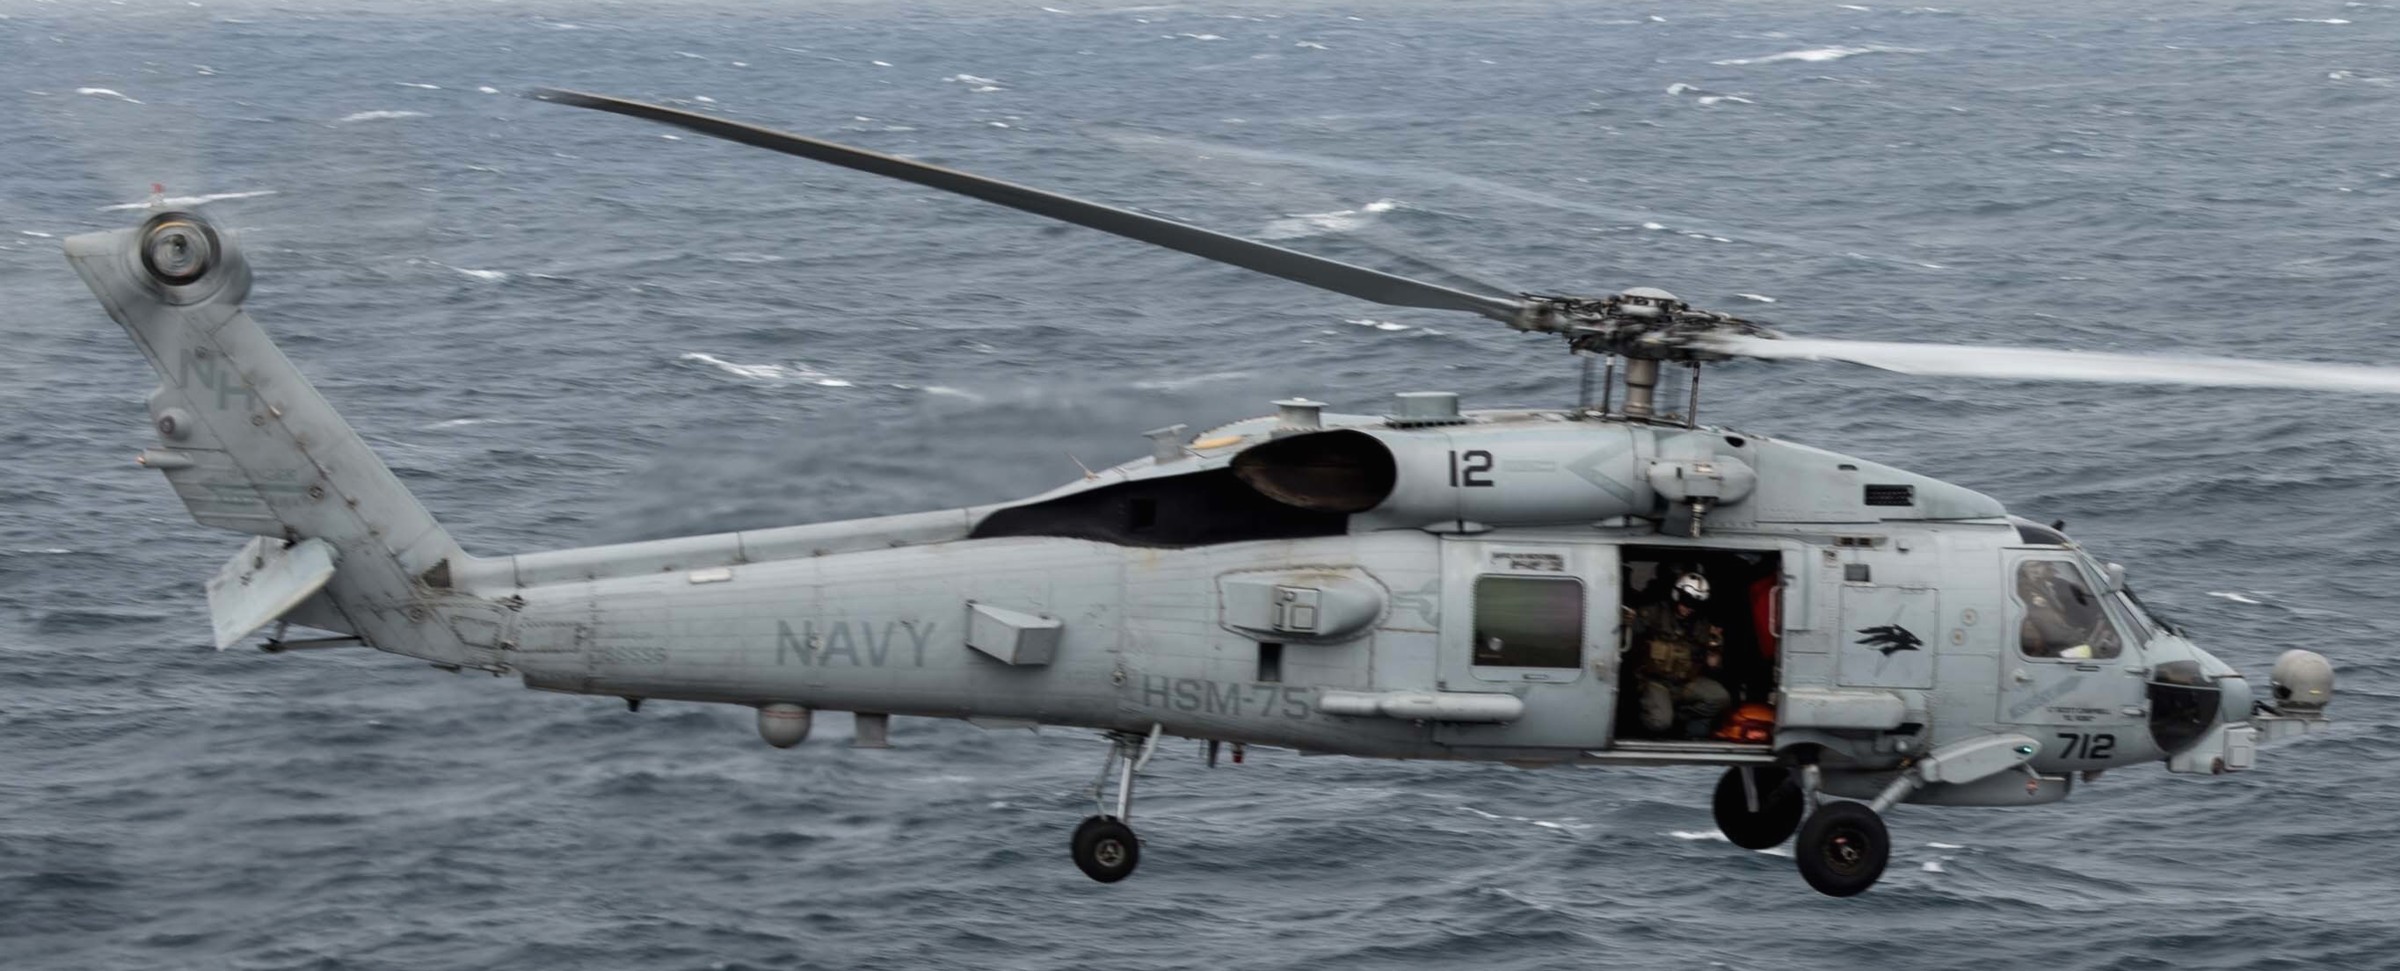 hsm-75 wolf pack helicopter maritime strike squadron mh-60r seahawk cvn-74 uss john stennis 27